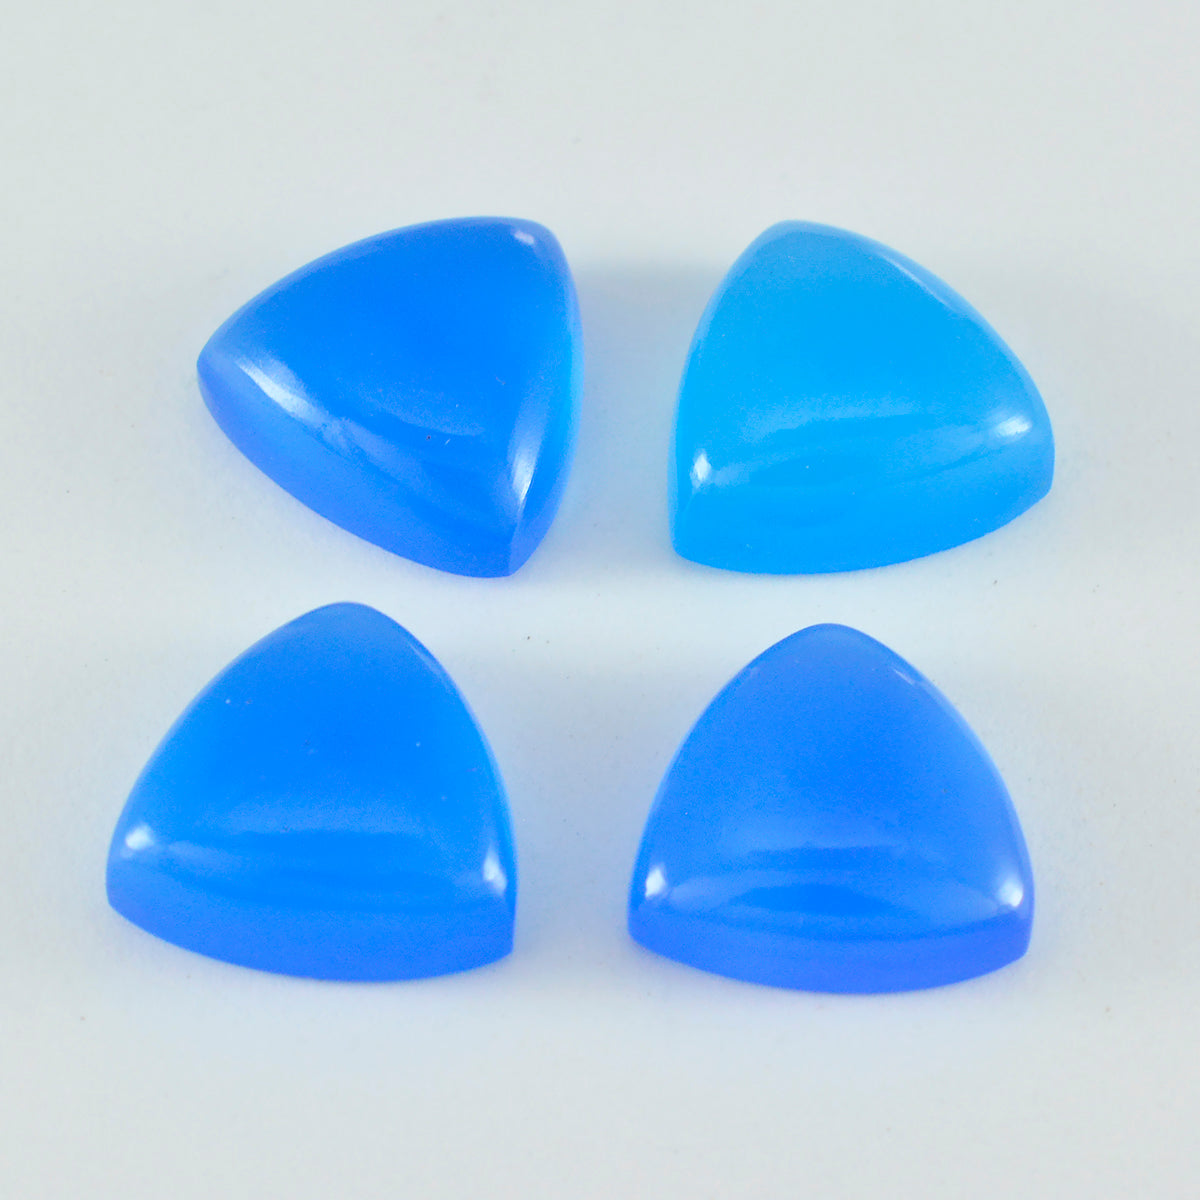 Riyogems 1 pieza cabujón de calcedonia azul 11x11 mm forma de trillón gemas de calidad AA